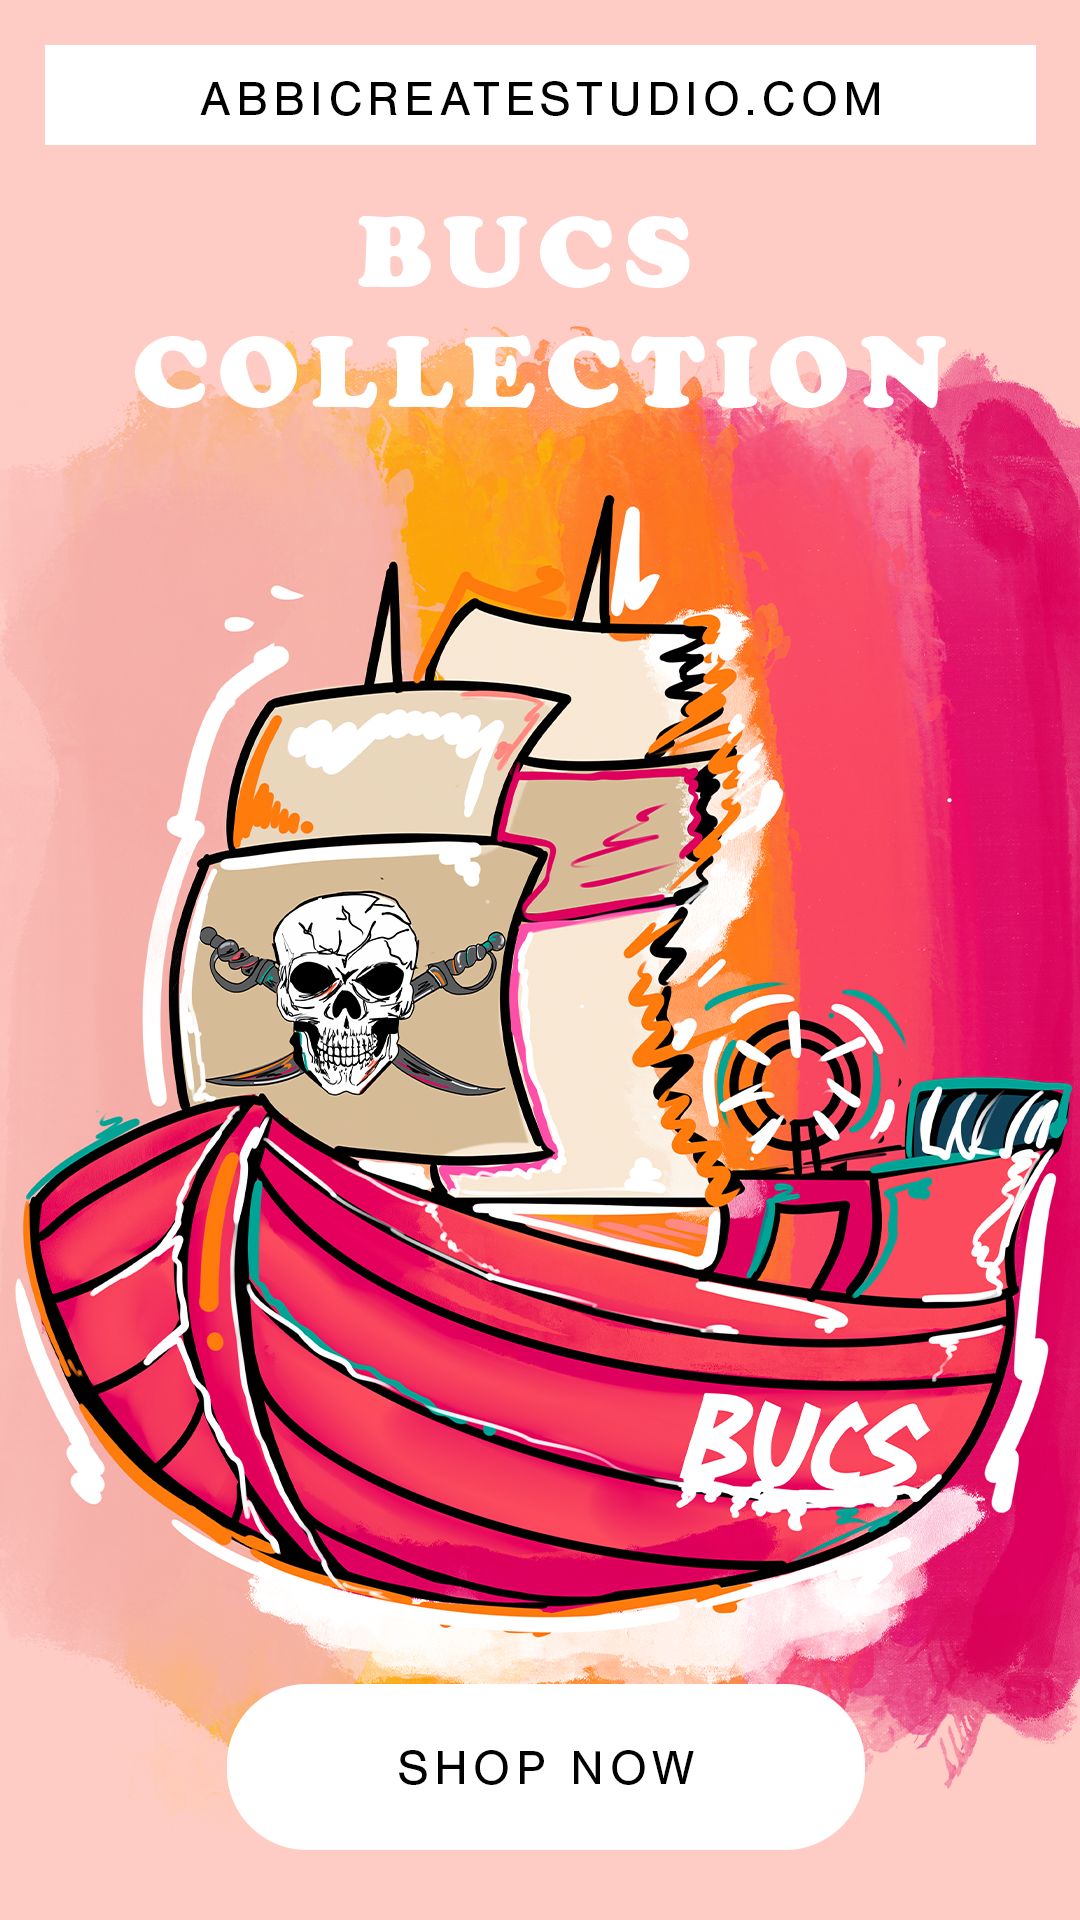 BUCS Pirate ship illustration design by Abbicreates Studio | Tampa bay Artist 